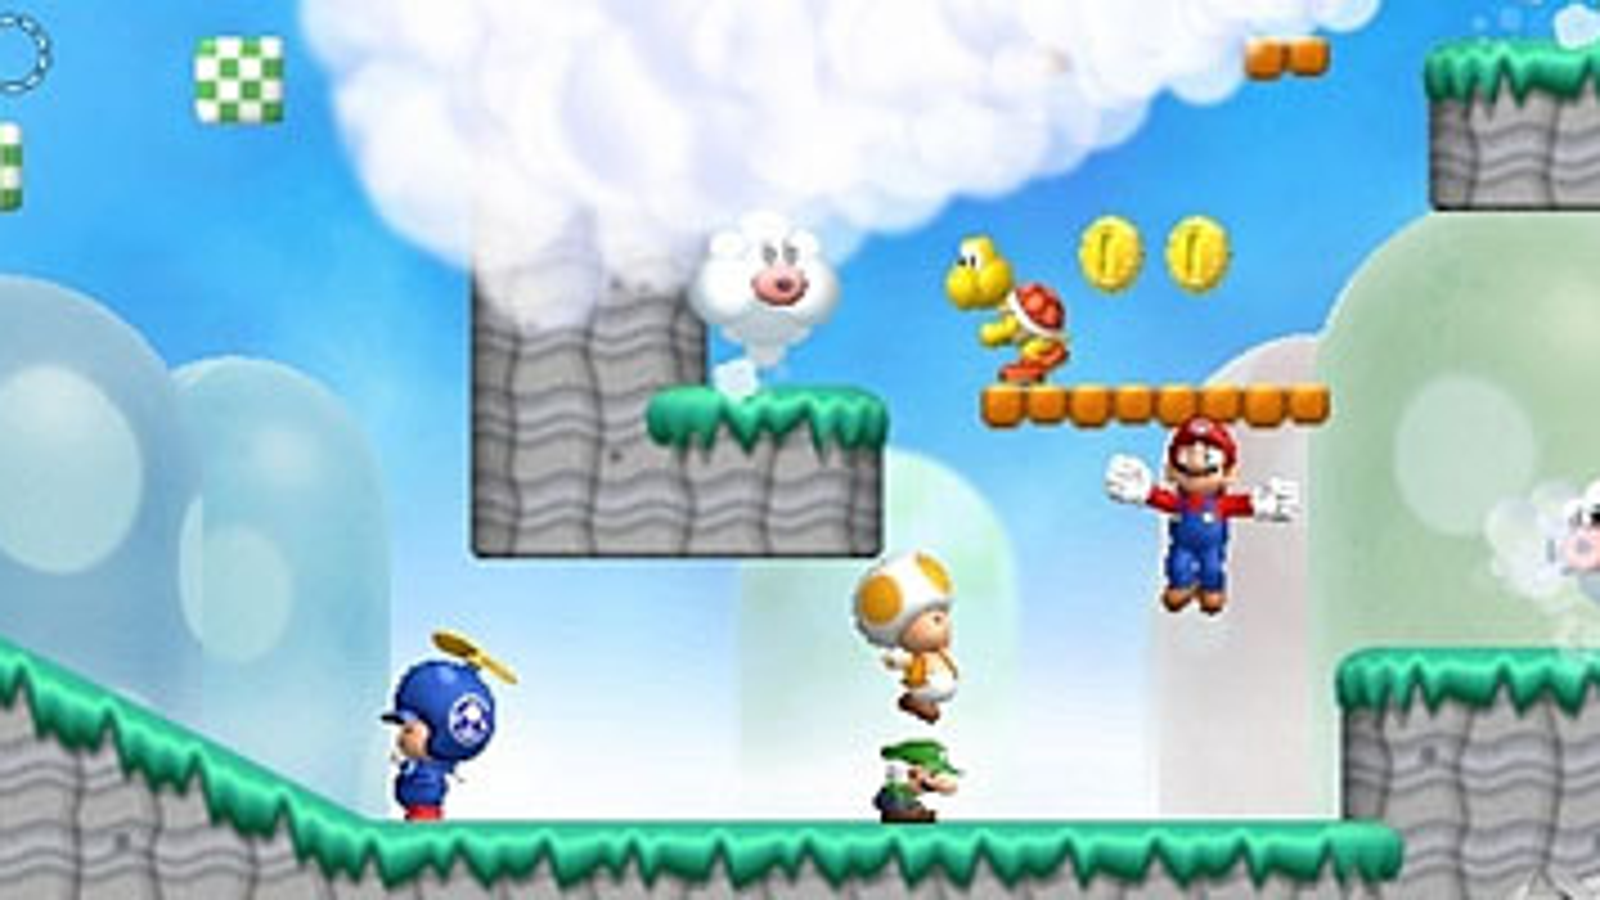 discretie levenslang Verdienen New Super Mario Bros. Wii sells 2.5 million units in Europe | VG247